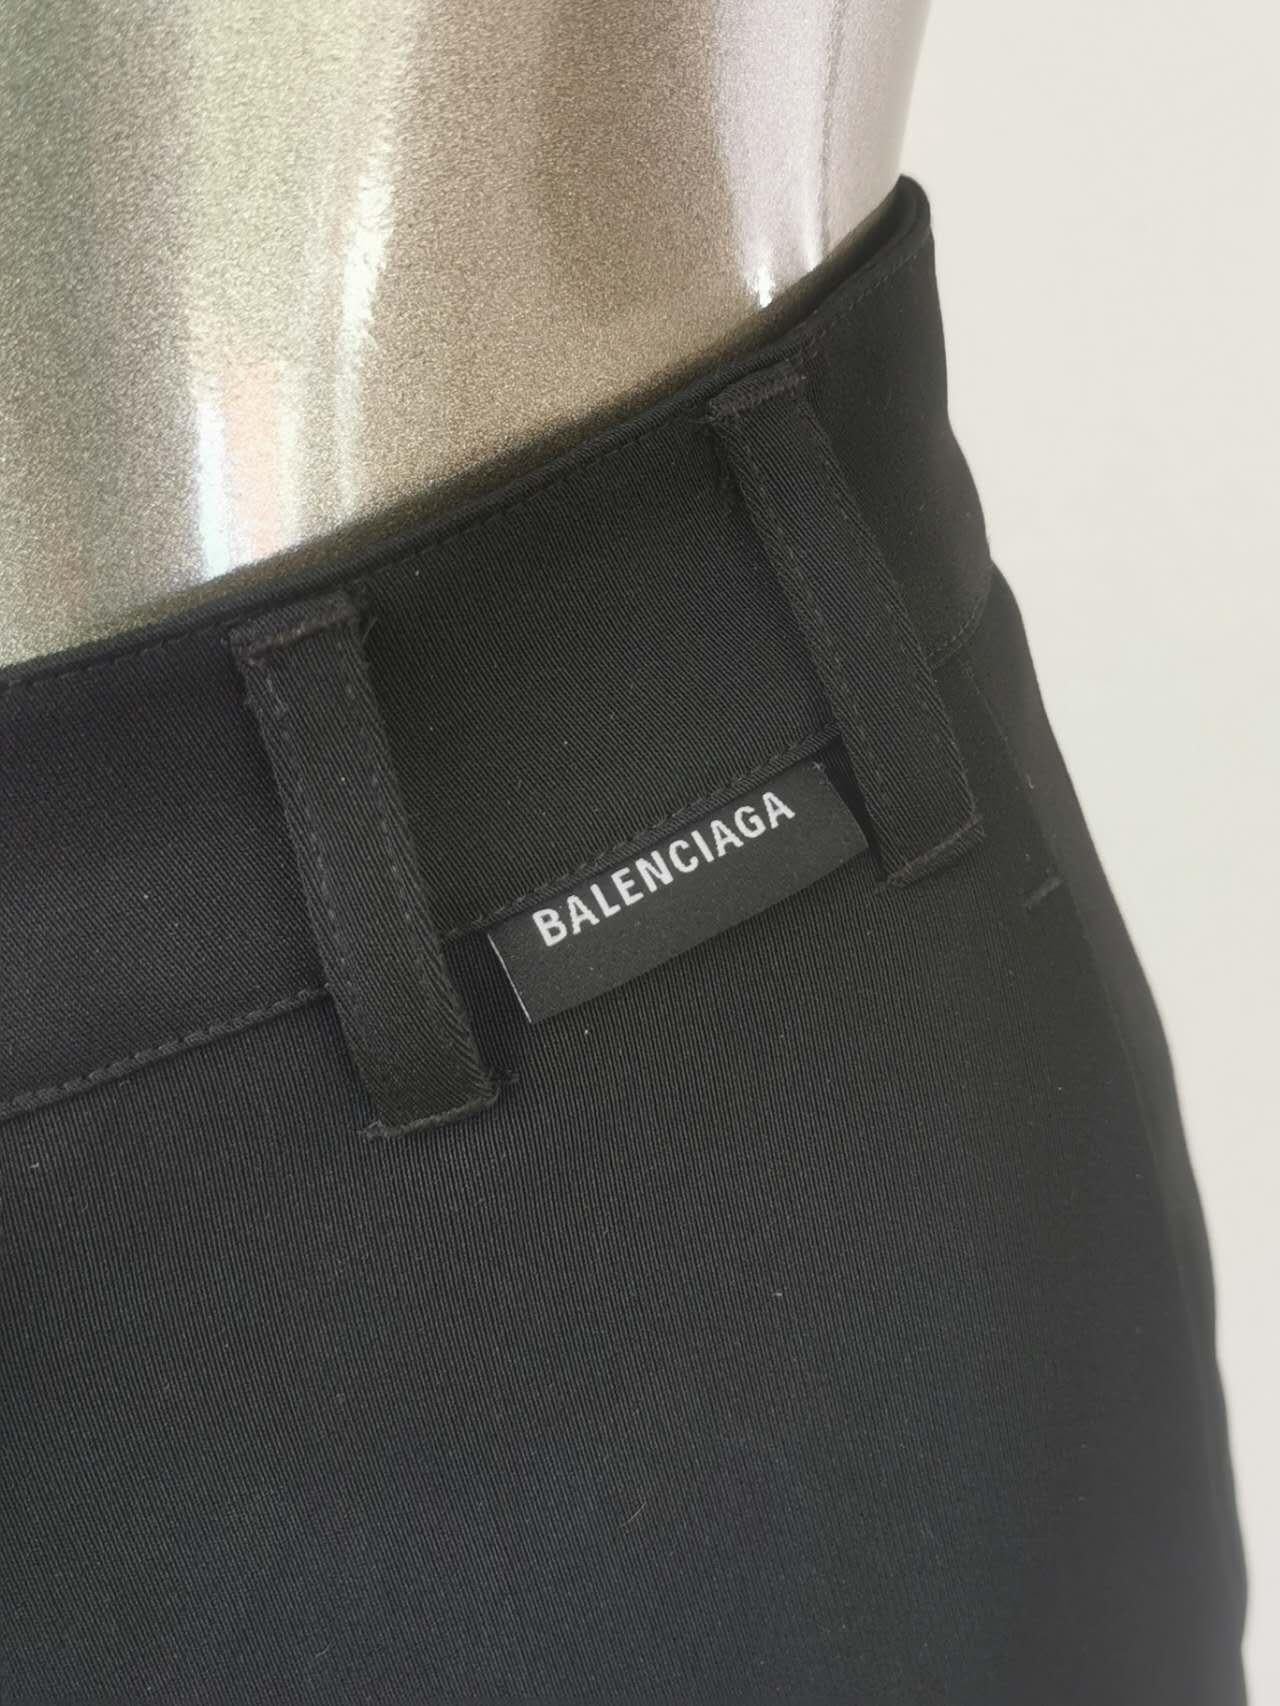 Balenciaga Black Wide Leg Tailored Pants SZ 34 Long For Sale 1